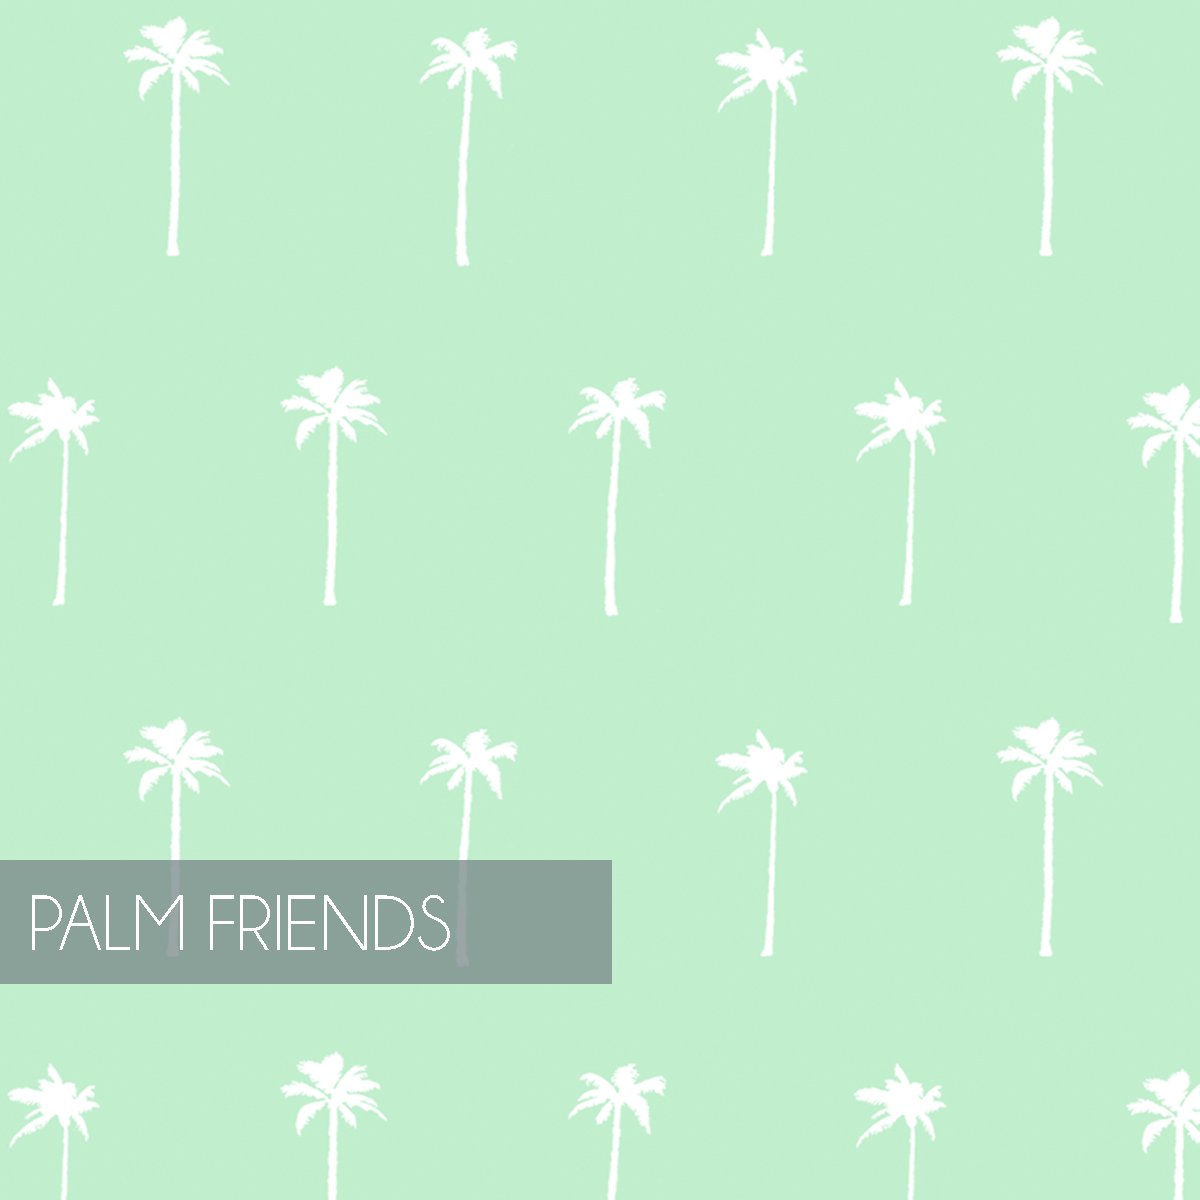 PalmFriends.jpg